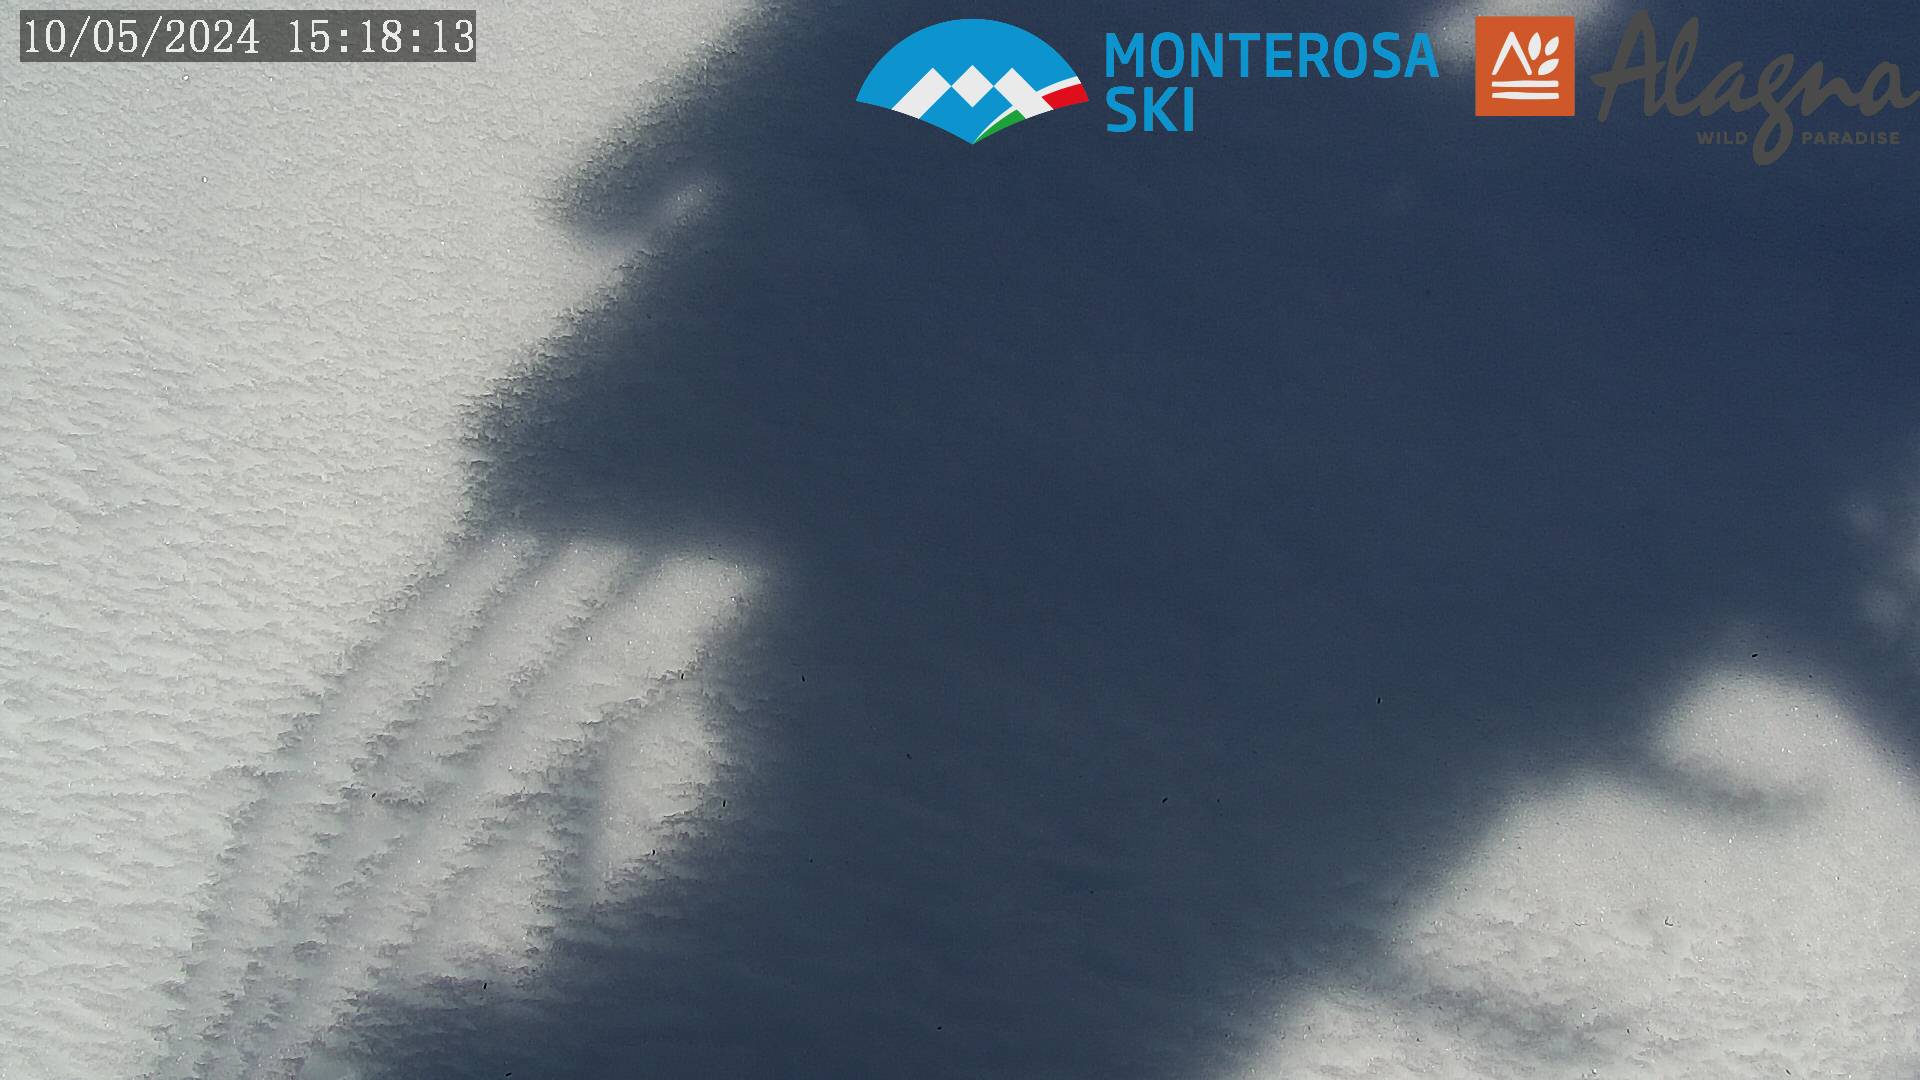 Monterosa-ski Alagna Valsesia - Altopiano di Cimalegna